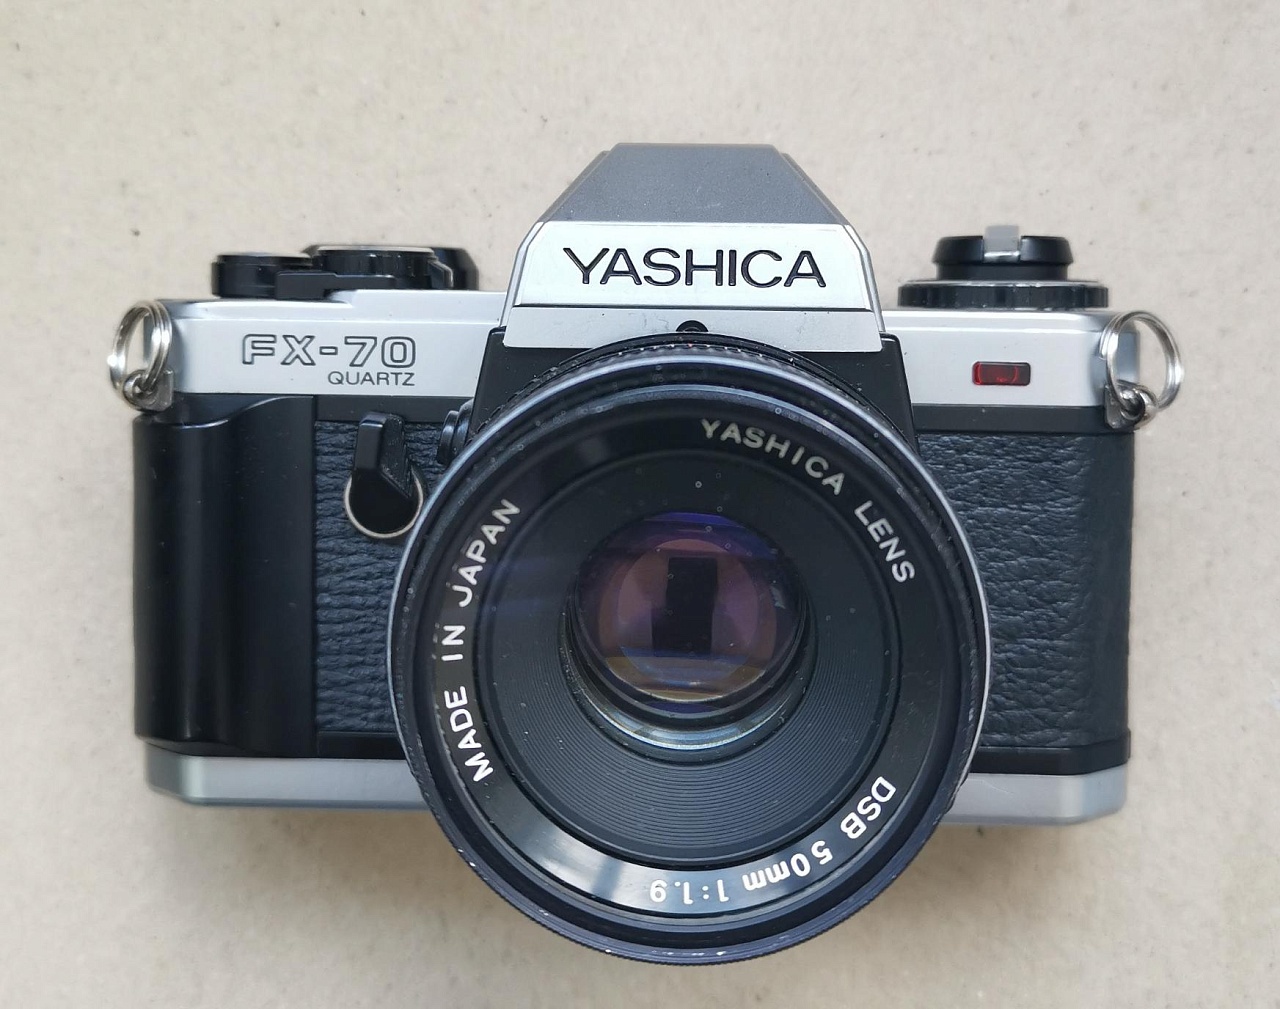 Yashica FX-70 Quartz + Yashica Lens ML 50 mm f/1.9 фото №1